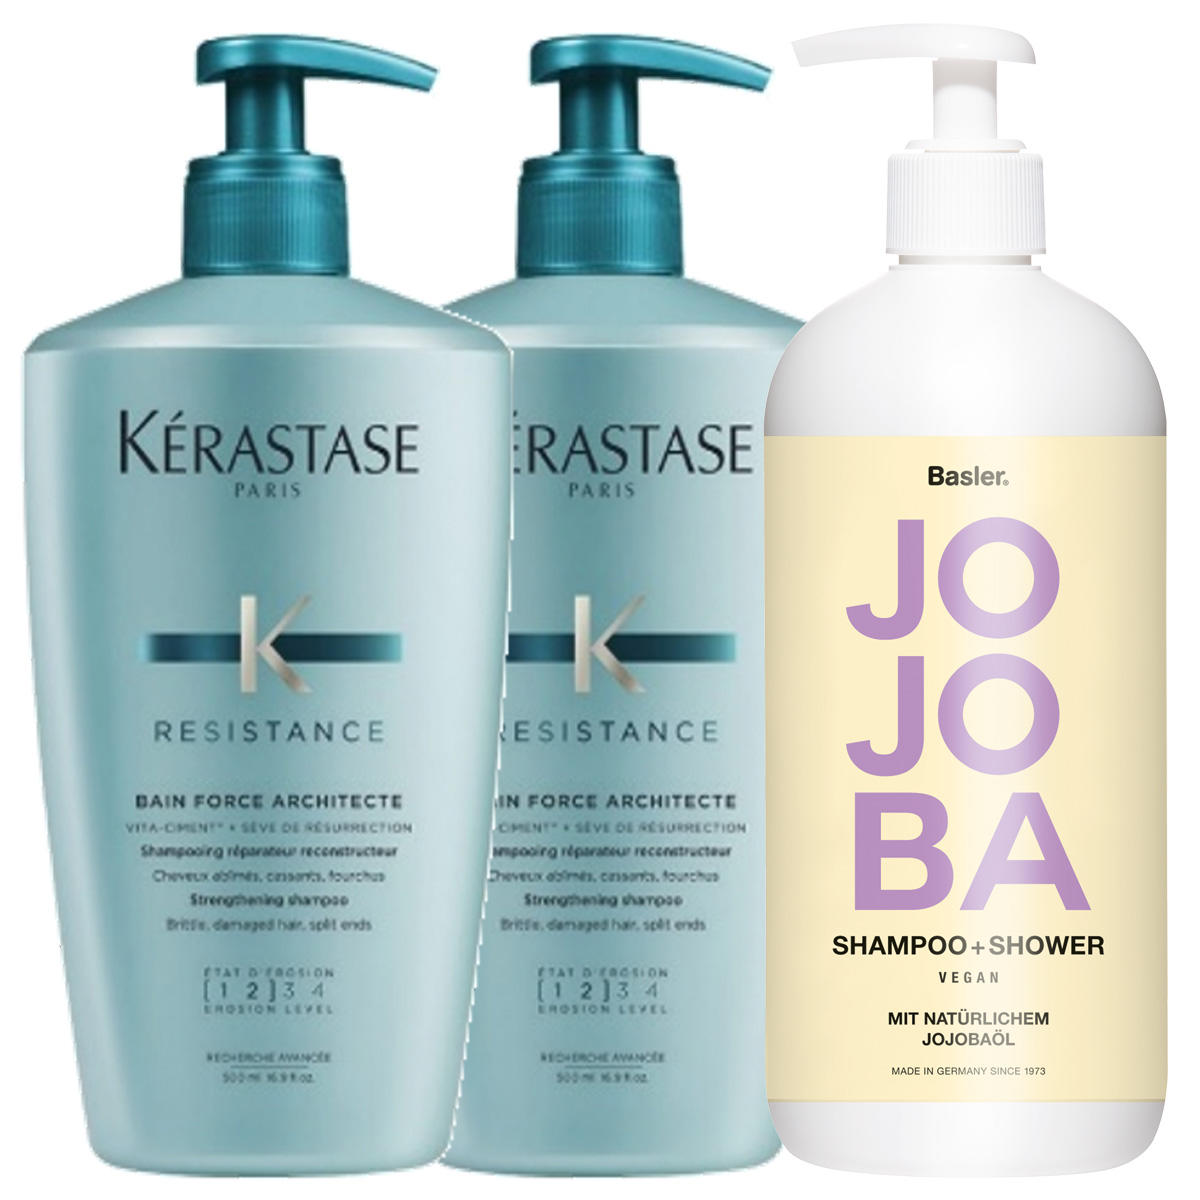 Kérastase Resistance Bain Force Architecte Bundle 2 x 500 ml + Basler Jojoba Shampoo & Shower 500 ml free of charge - 1